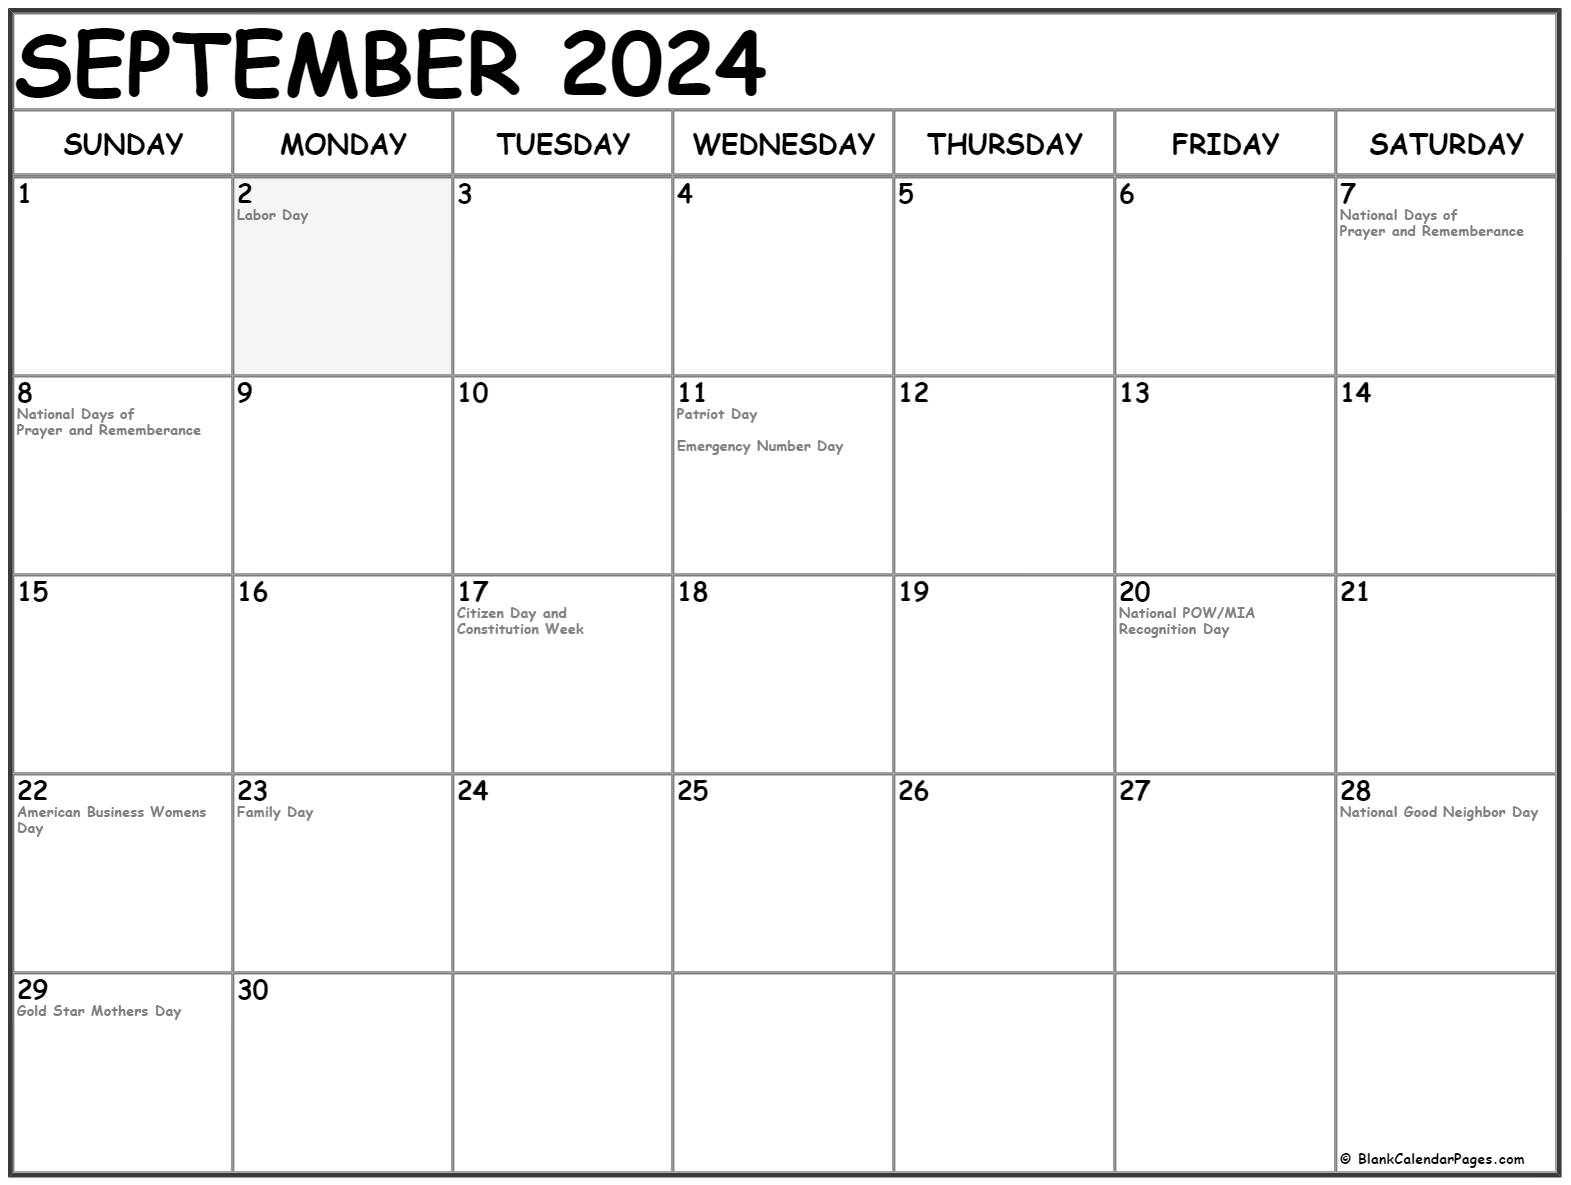 September 2022 Holiday Calendar September 2022 With Holidays Calendar